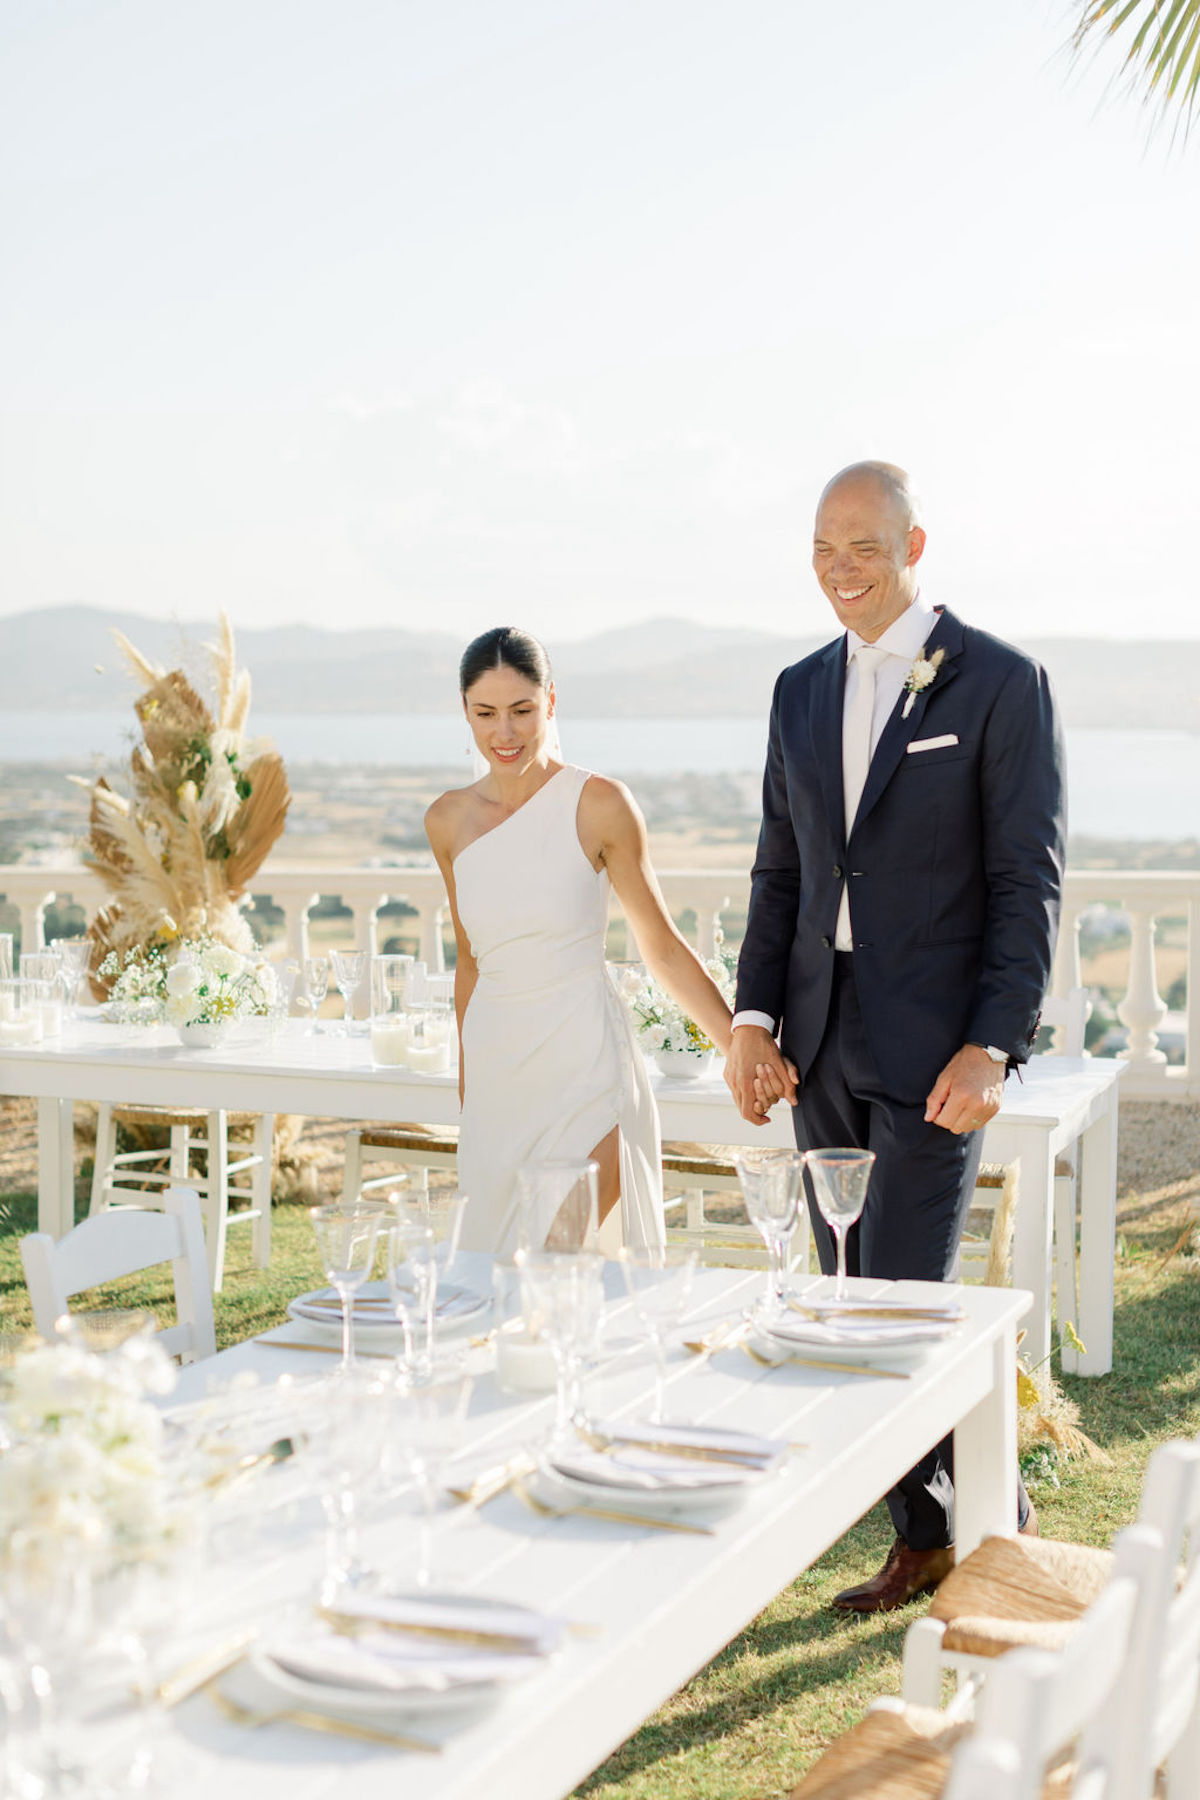 classic Mediterranean wedding style